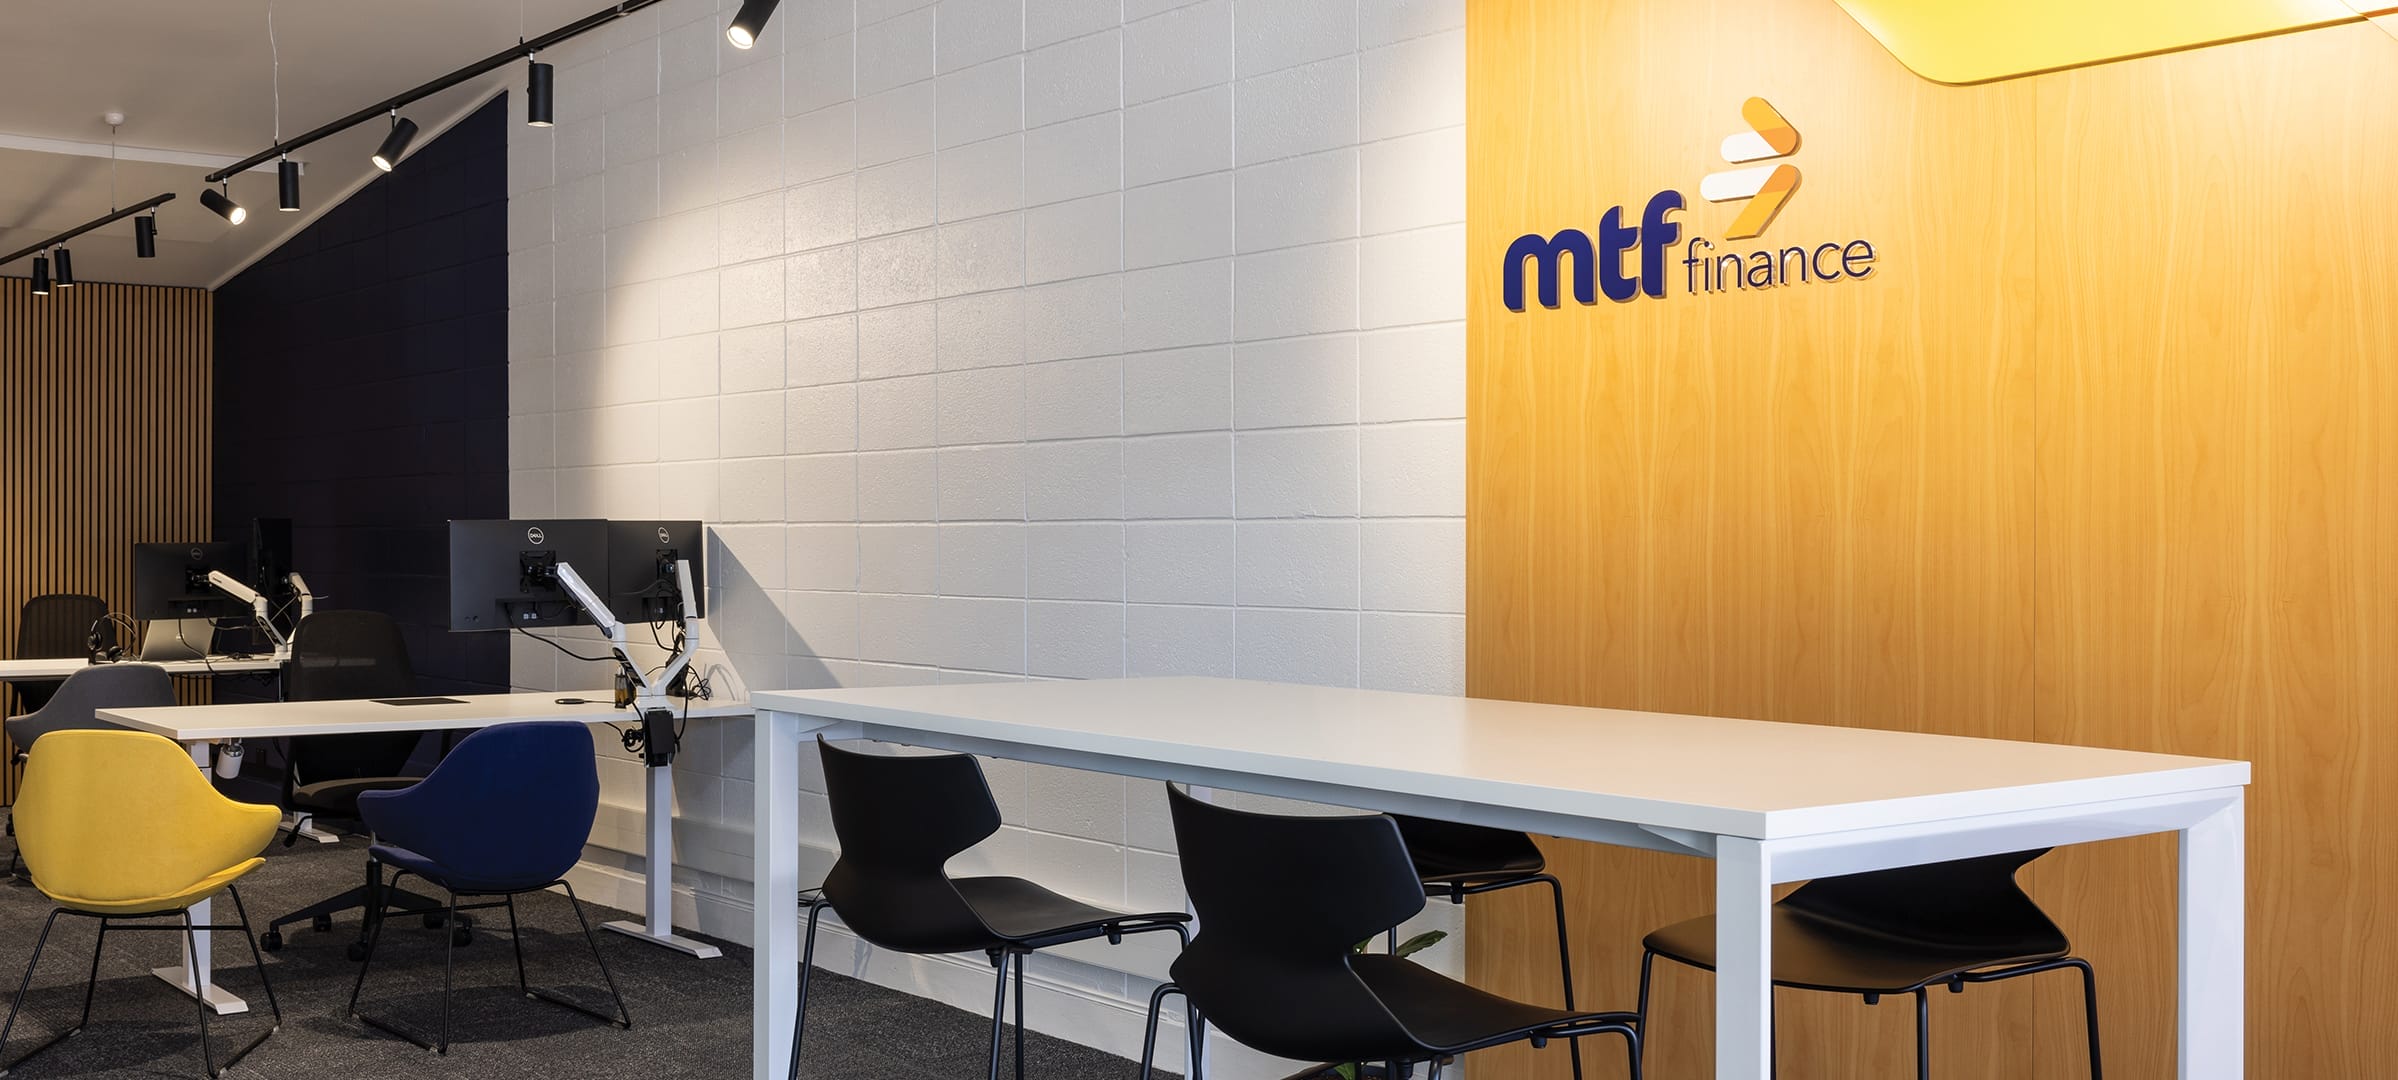 mtf finance howick interior design